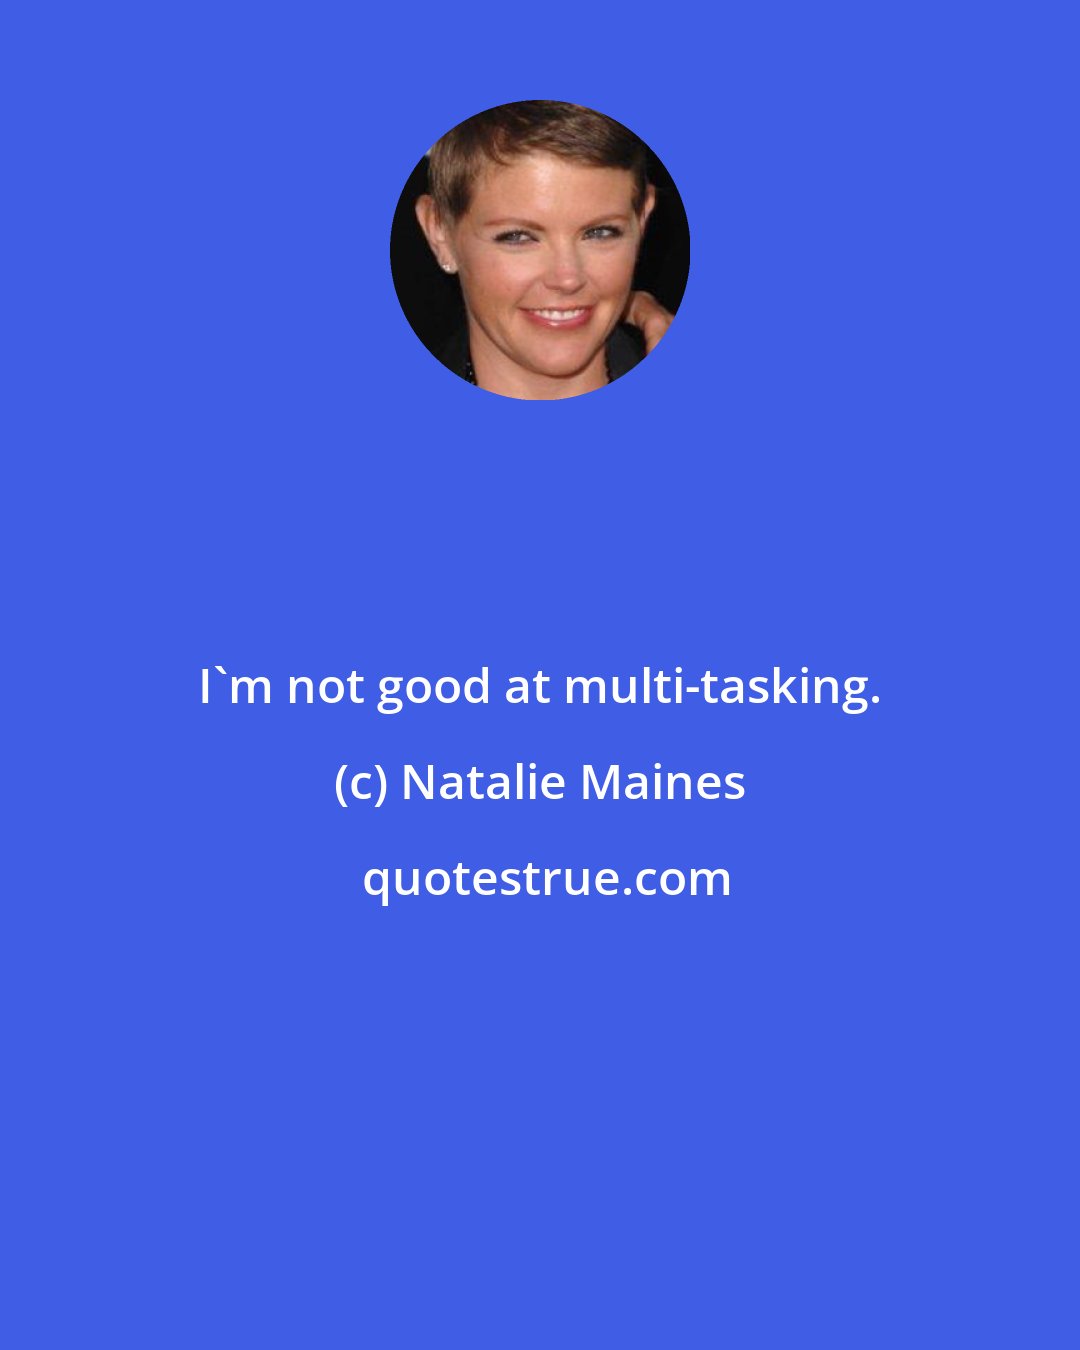 Natalie Maines: I'm not good at multi-tasking.